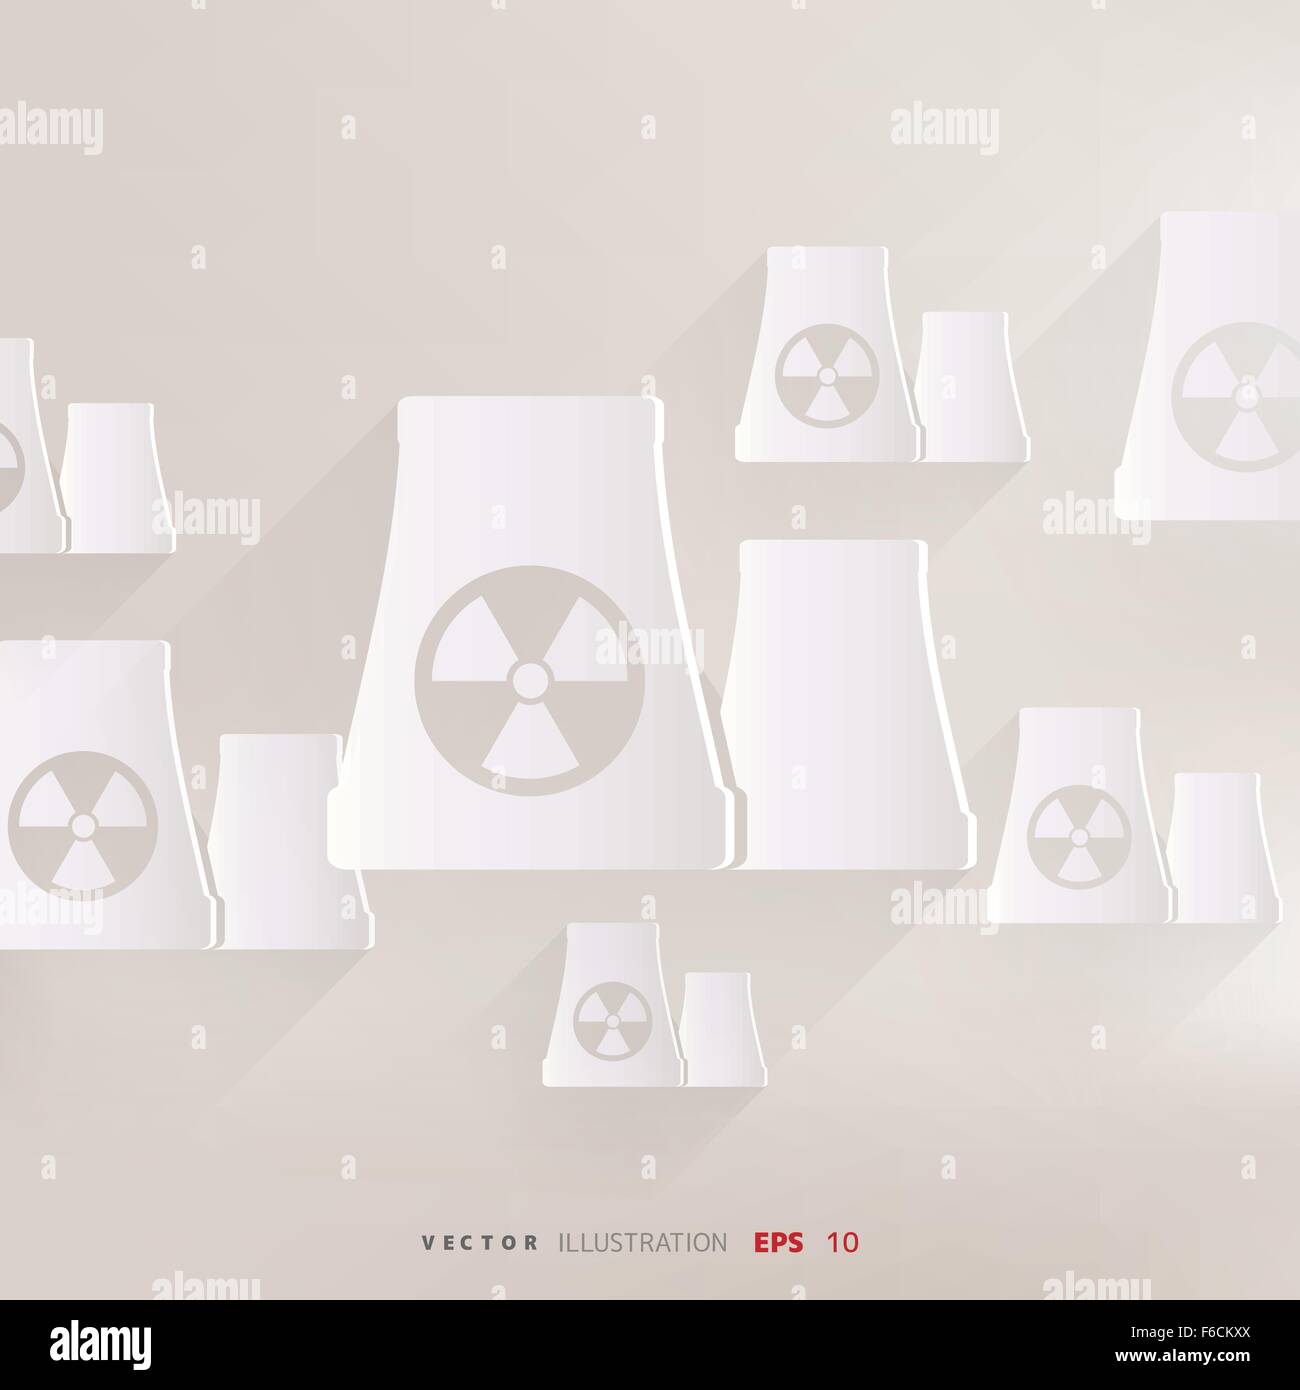 atomic power station icon Stock Vector Image & Art - Alamy